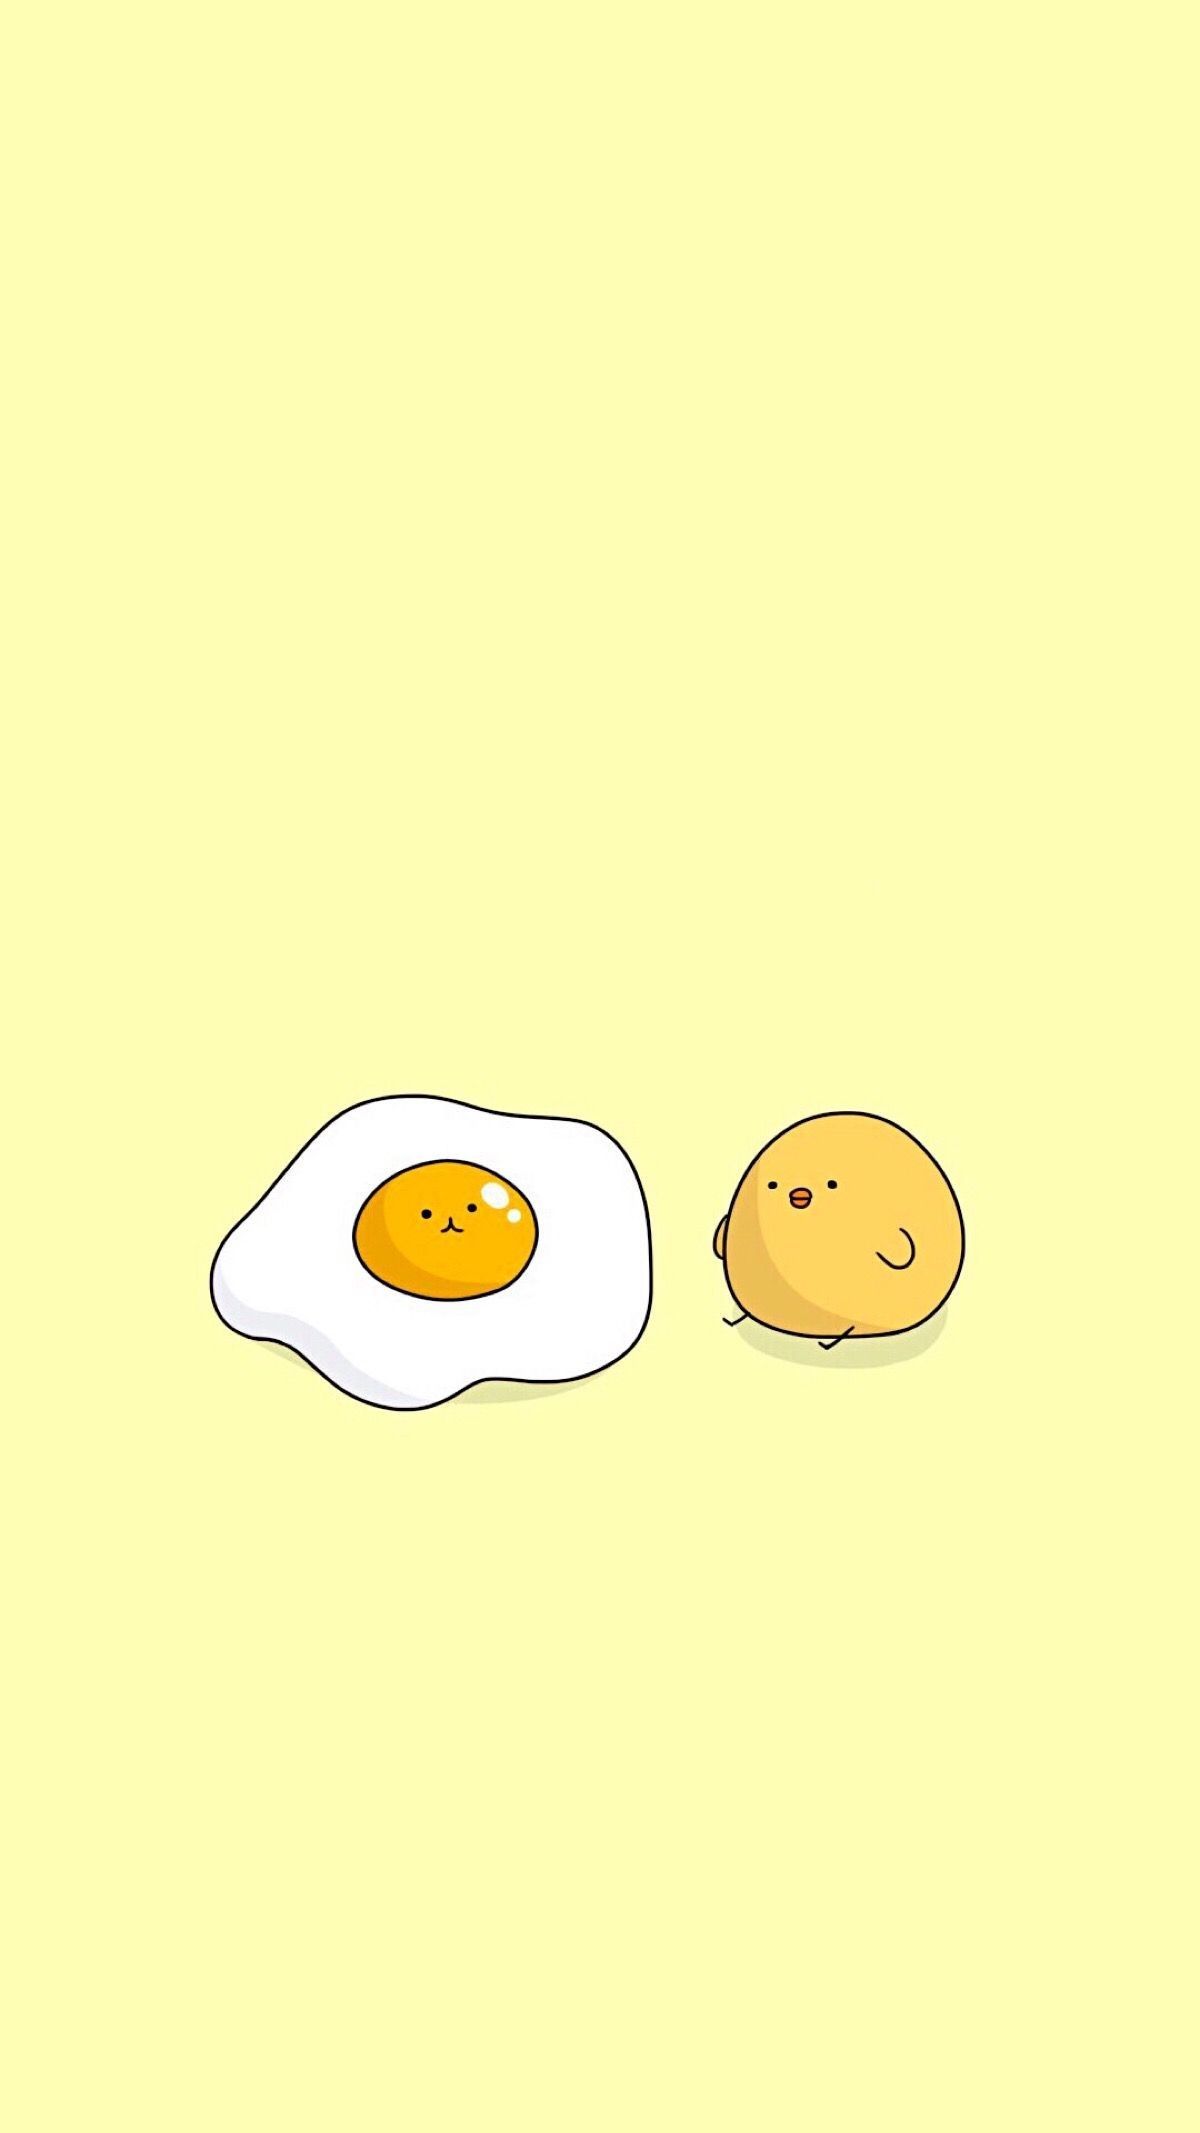 IPhone wallpaper of a fried egg and a potato - Egg, Gudetama